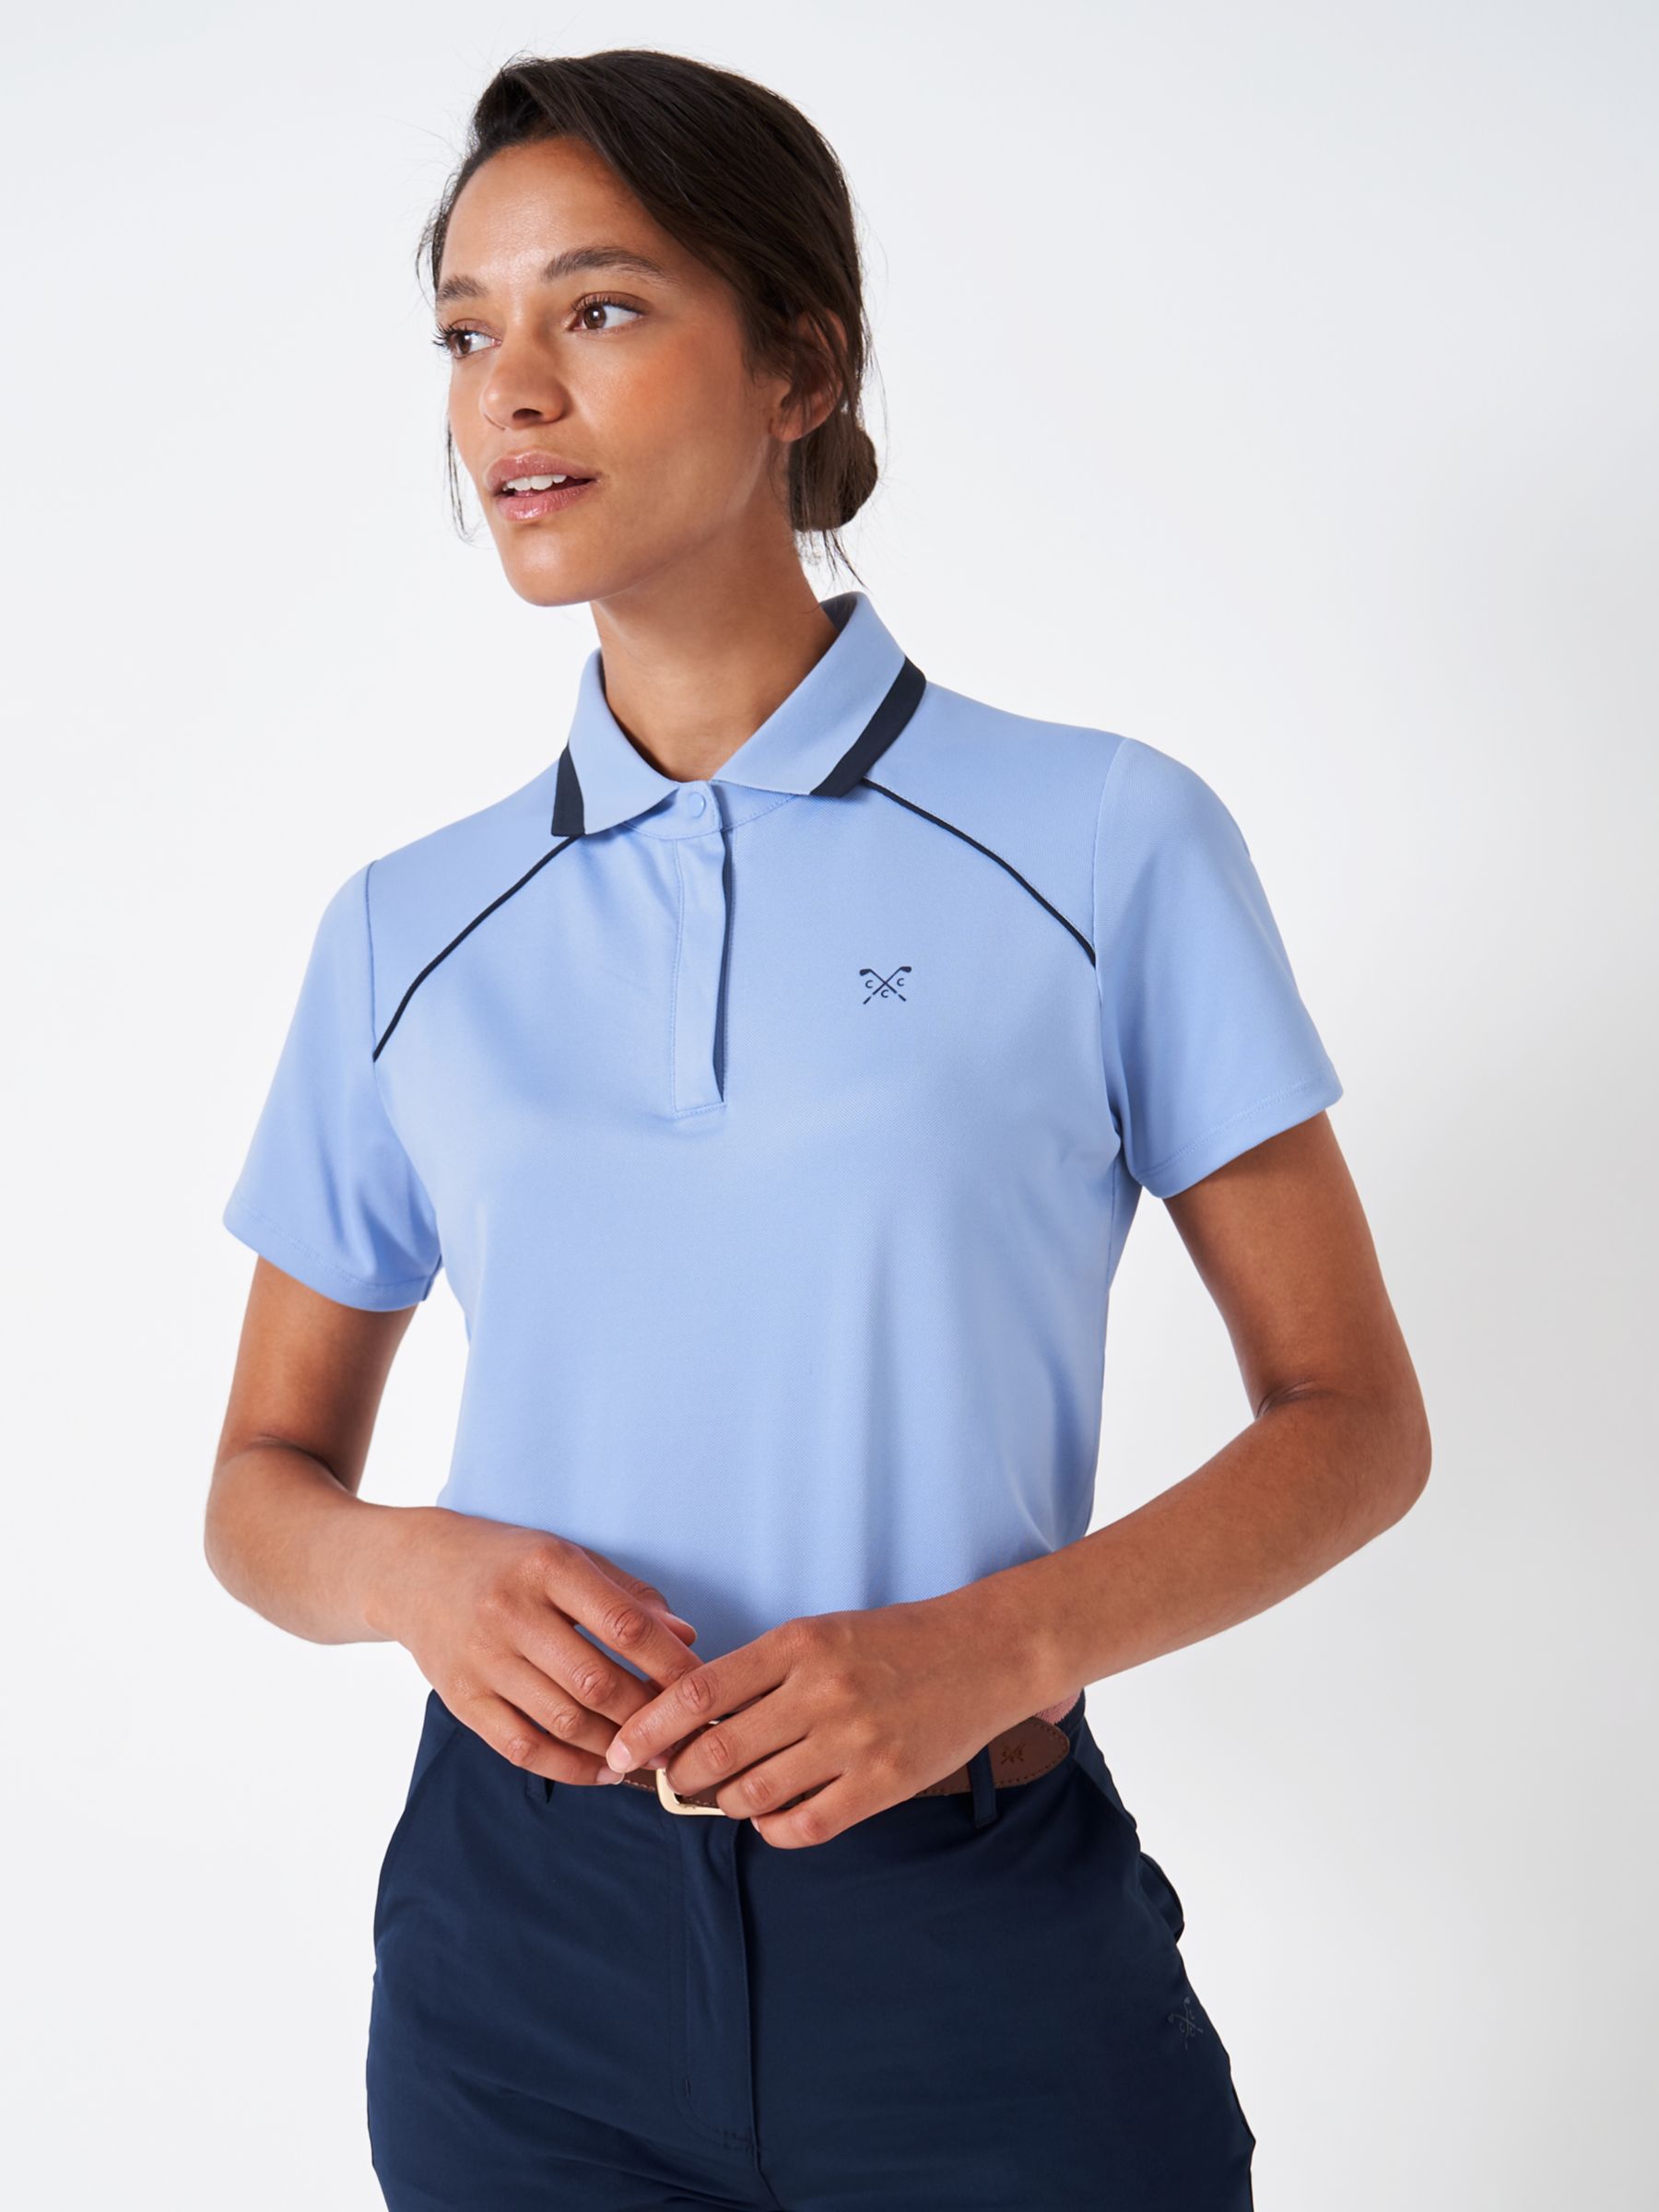 Рубашка-поло для гольфа из хлопка с кантом Crew Clothing, светло-синий рубашка поло briana open obey clothing цвет hydrangea